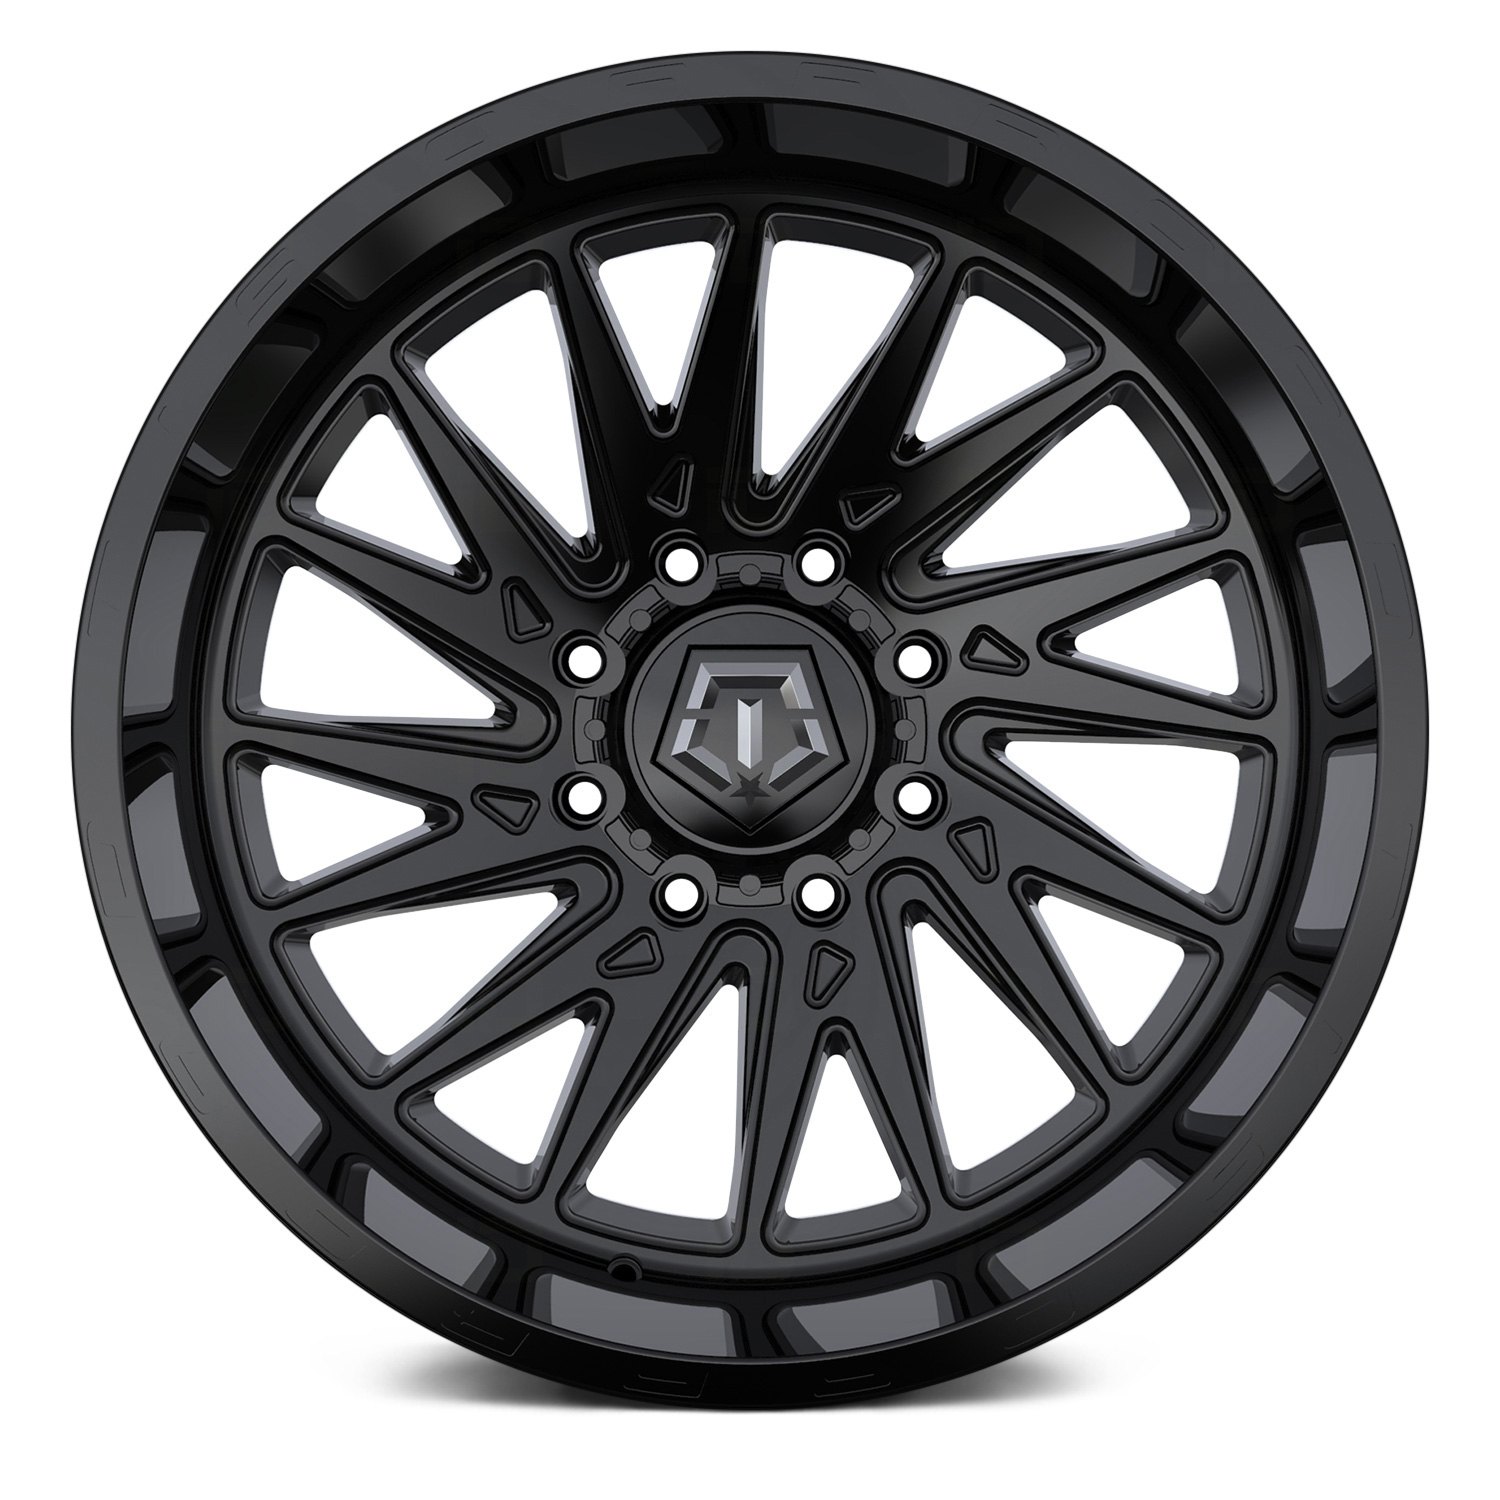 TIS® 547B Wheels - Gloss Black Rims